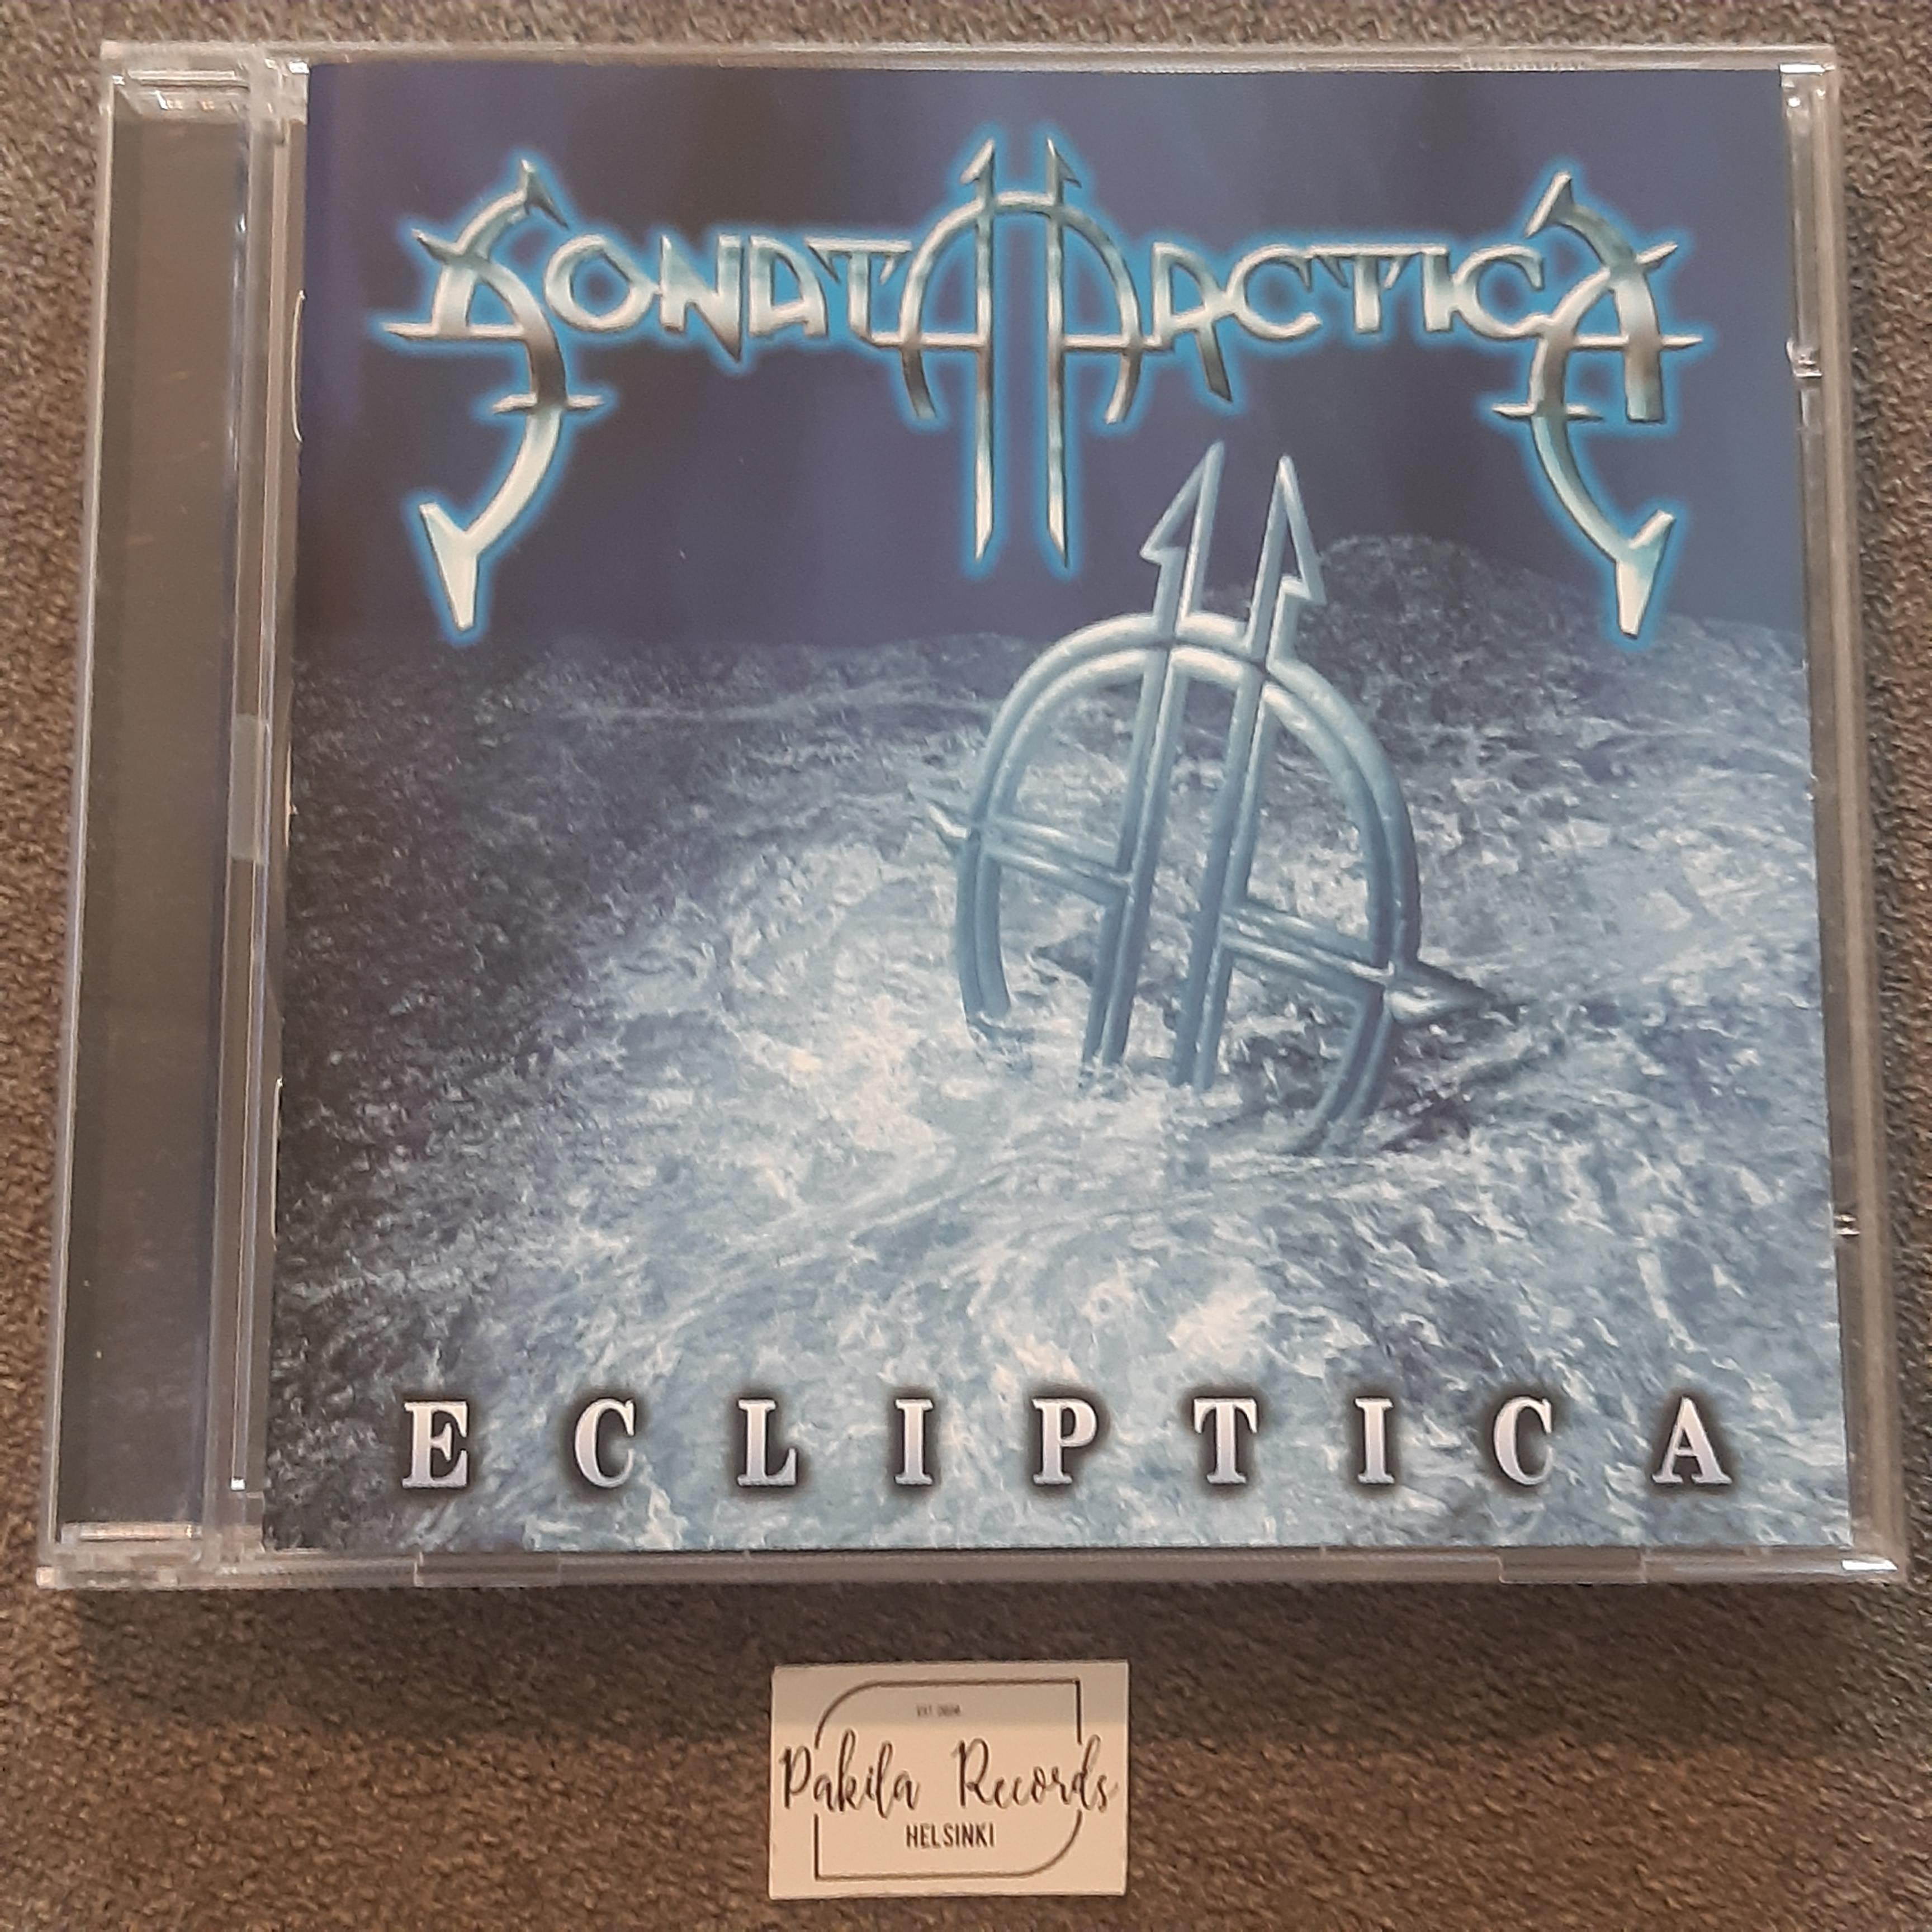 Sonata Arctica - Ecliptica - CD (käytetty)